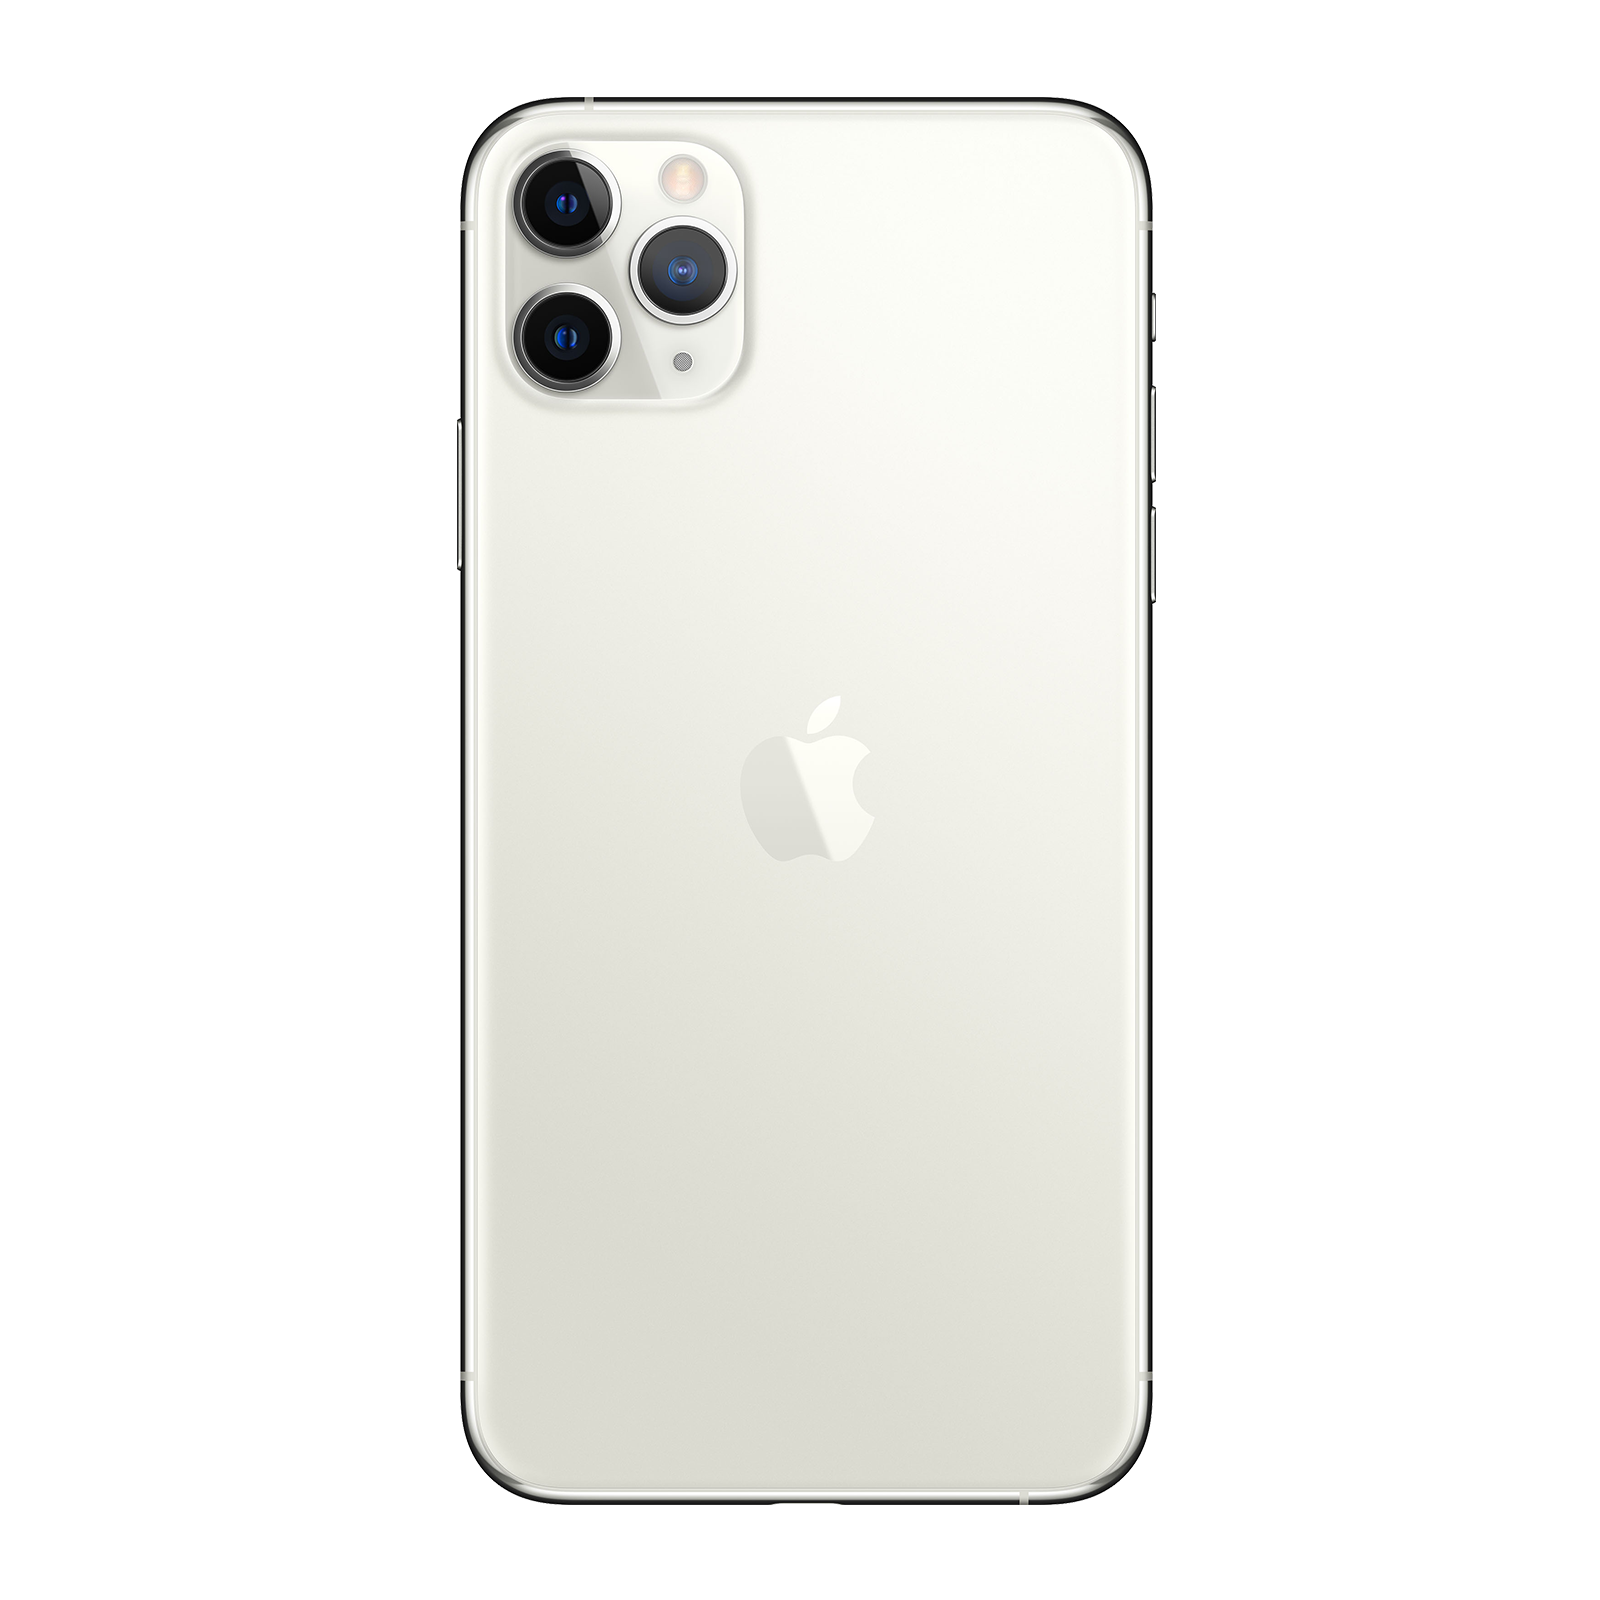 iPhone 11 Pro 512GB Silver Fair Unlocked - New Battery